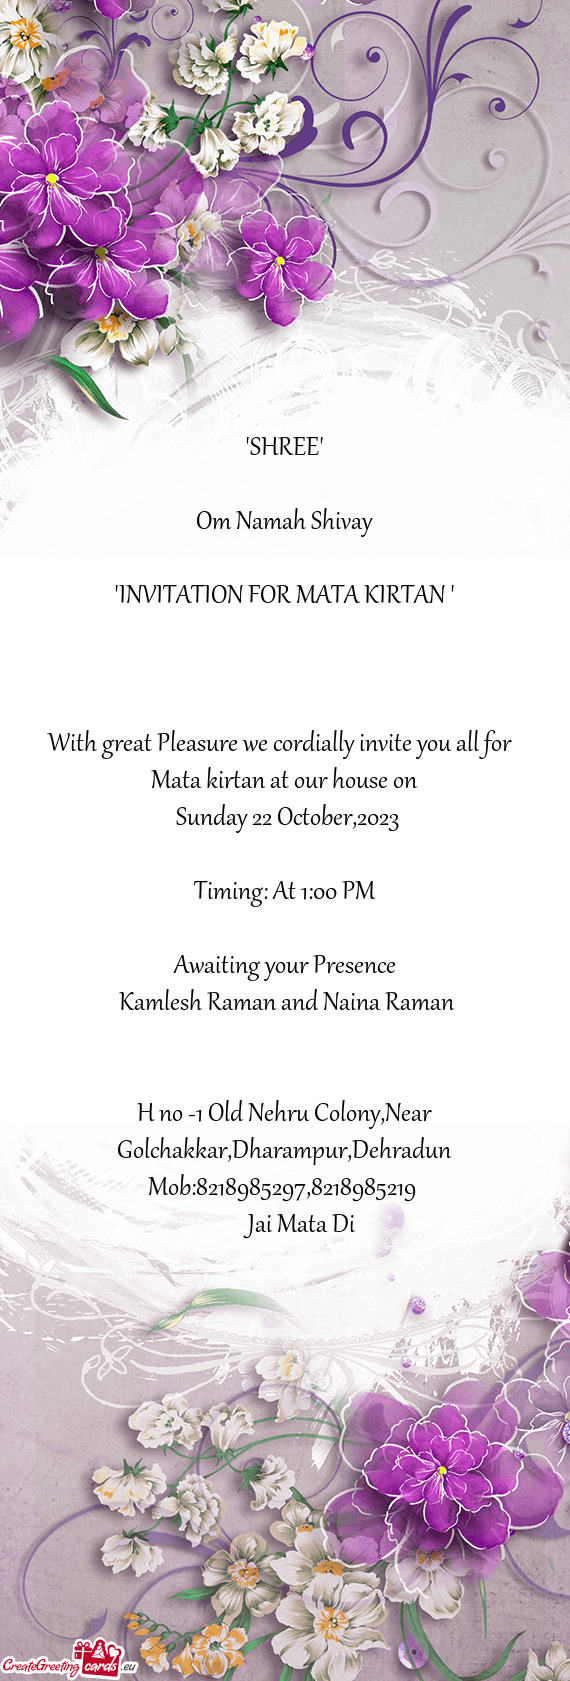 "INVITATION FOR MATA KIRTAN "